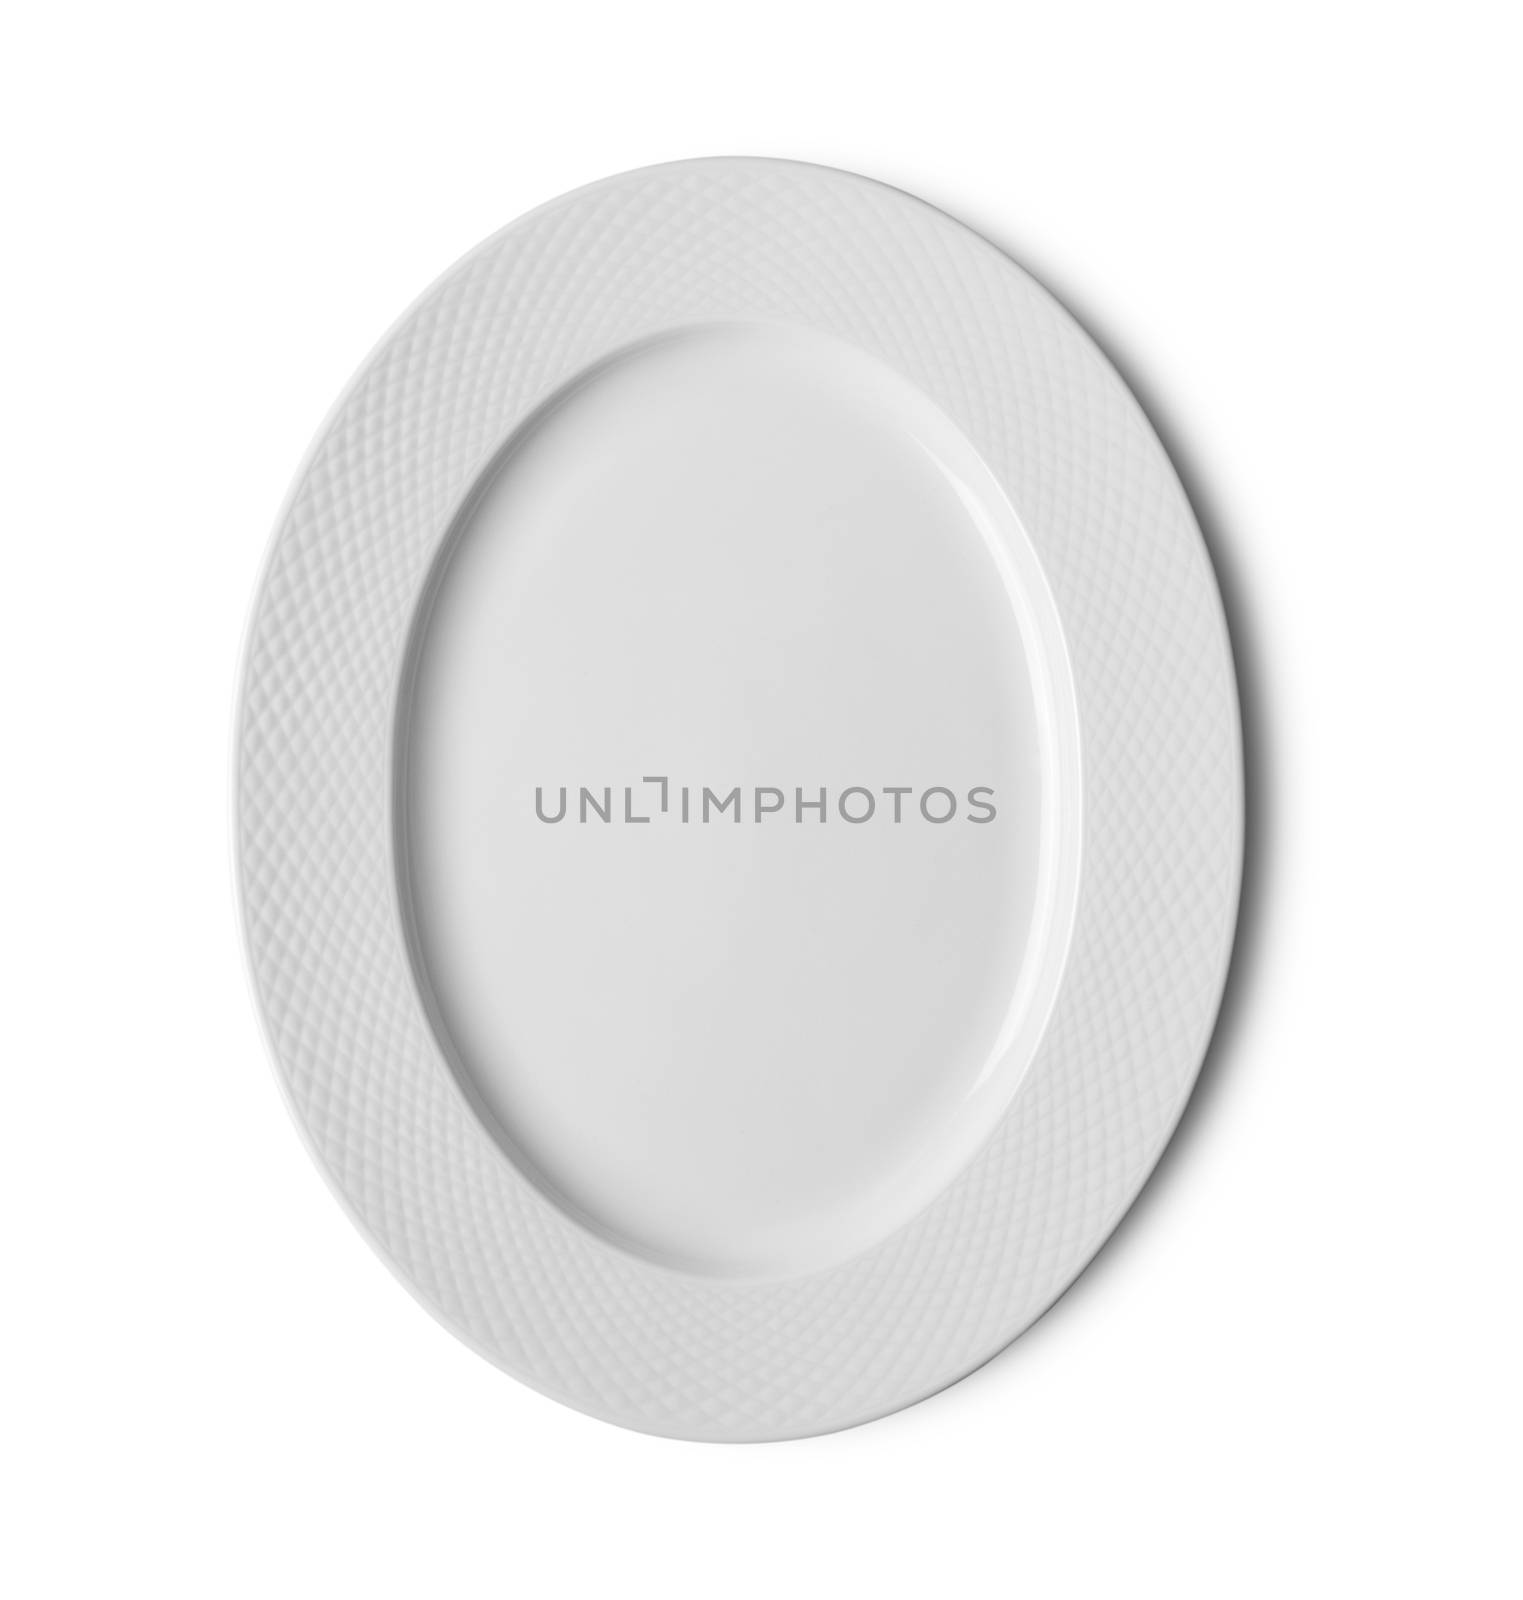 empty white ceramic plate on white background